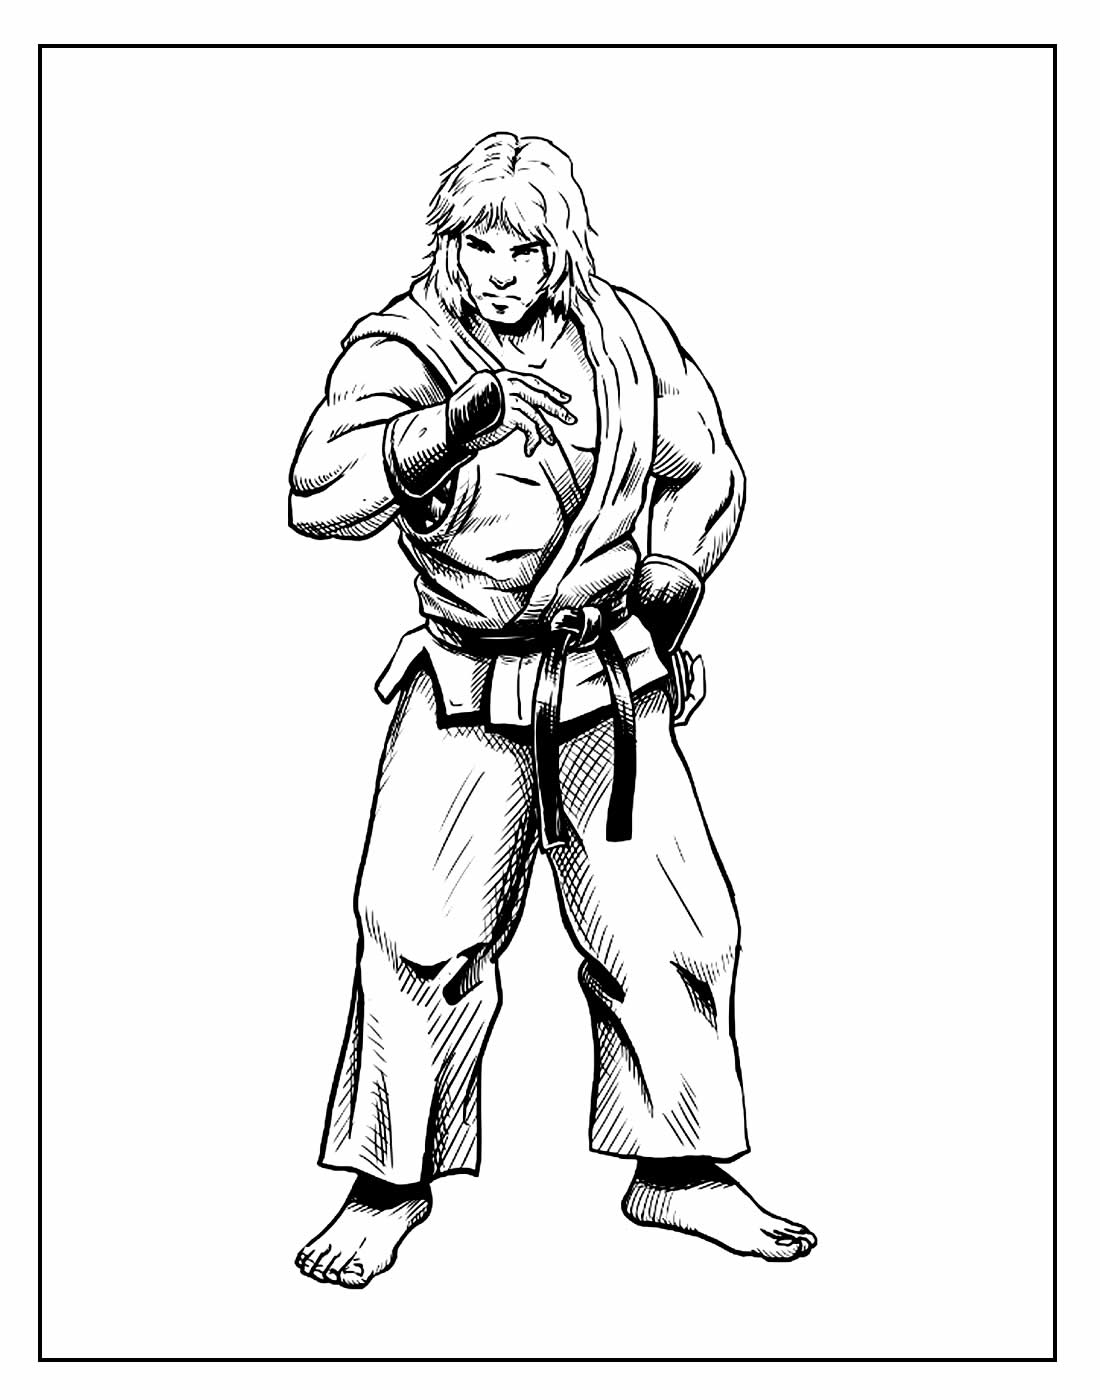 Desenho de Ken para colorir - Street Fighter